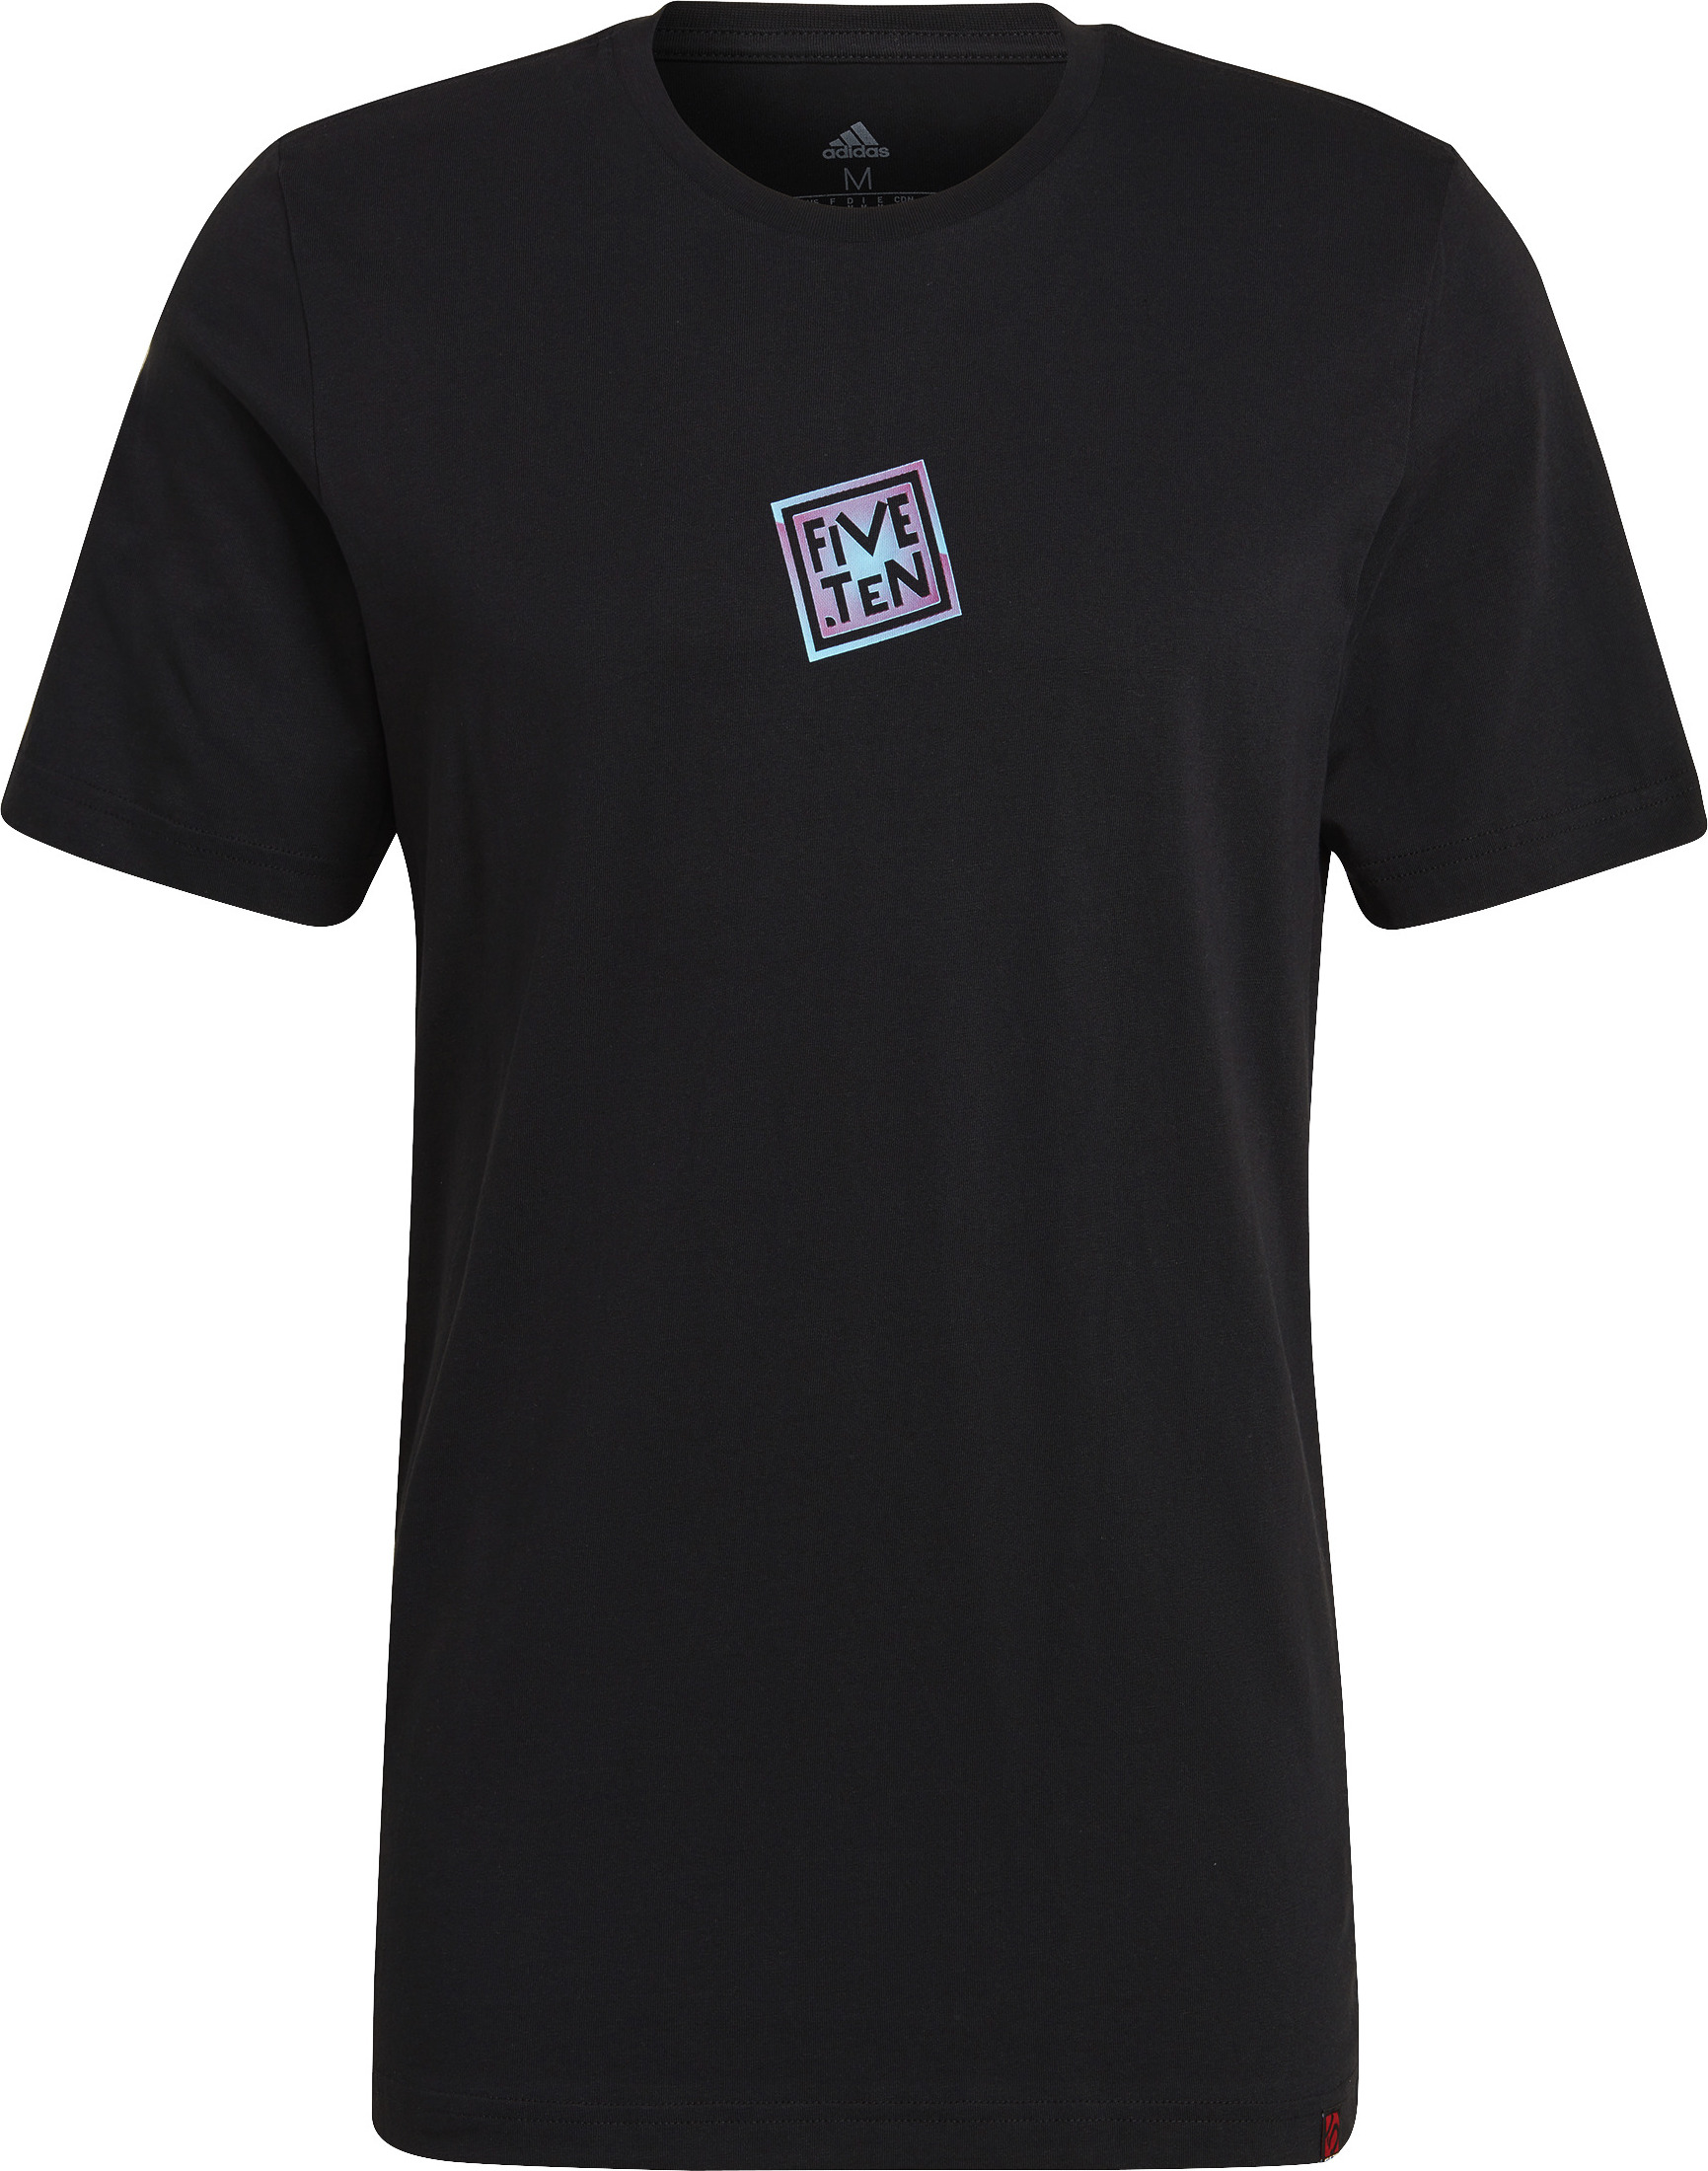 FiveTen Men's Heritage Logo T-Shirt Black XXL, Black